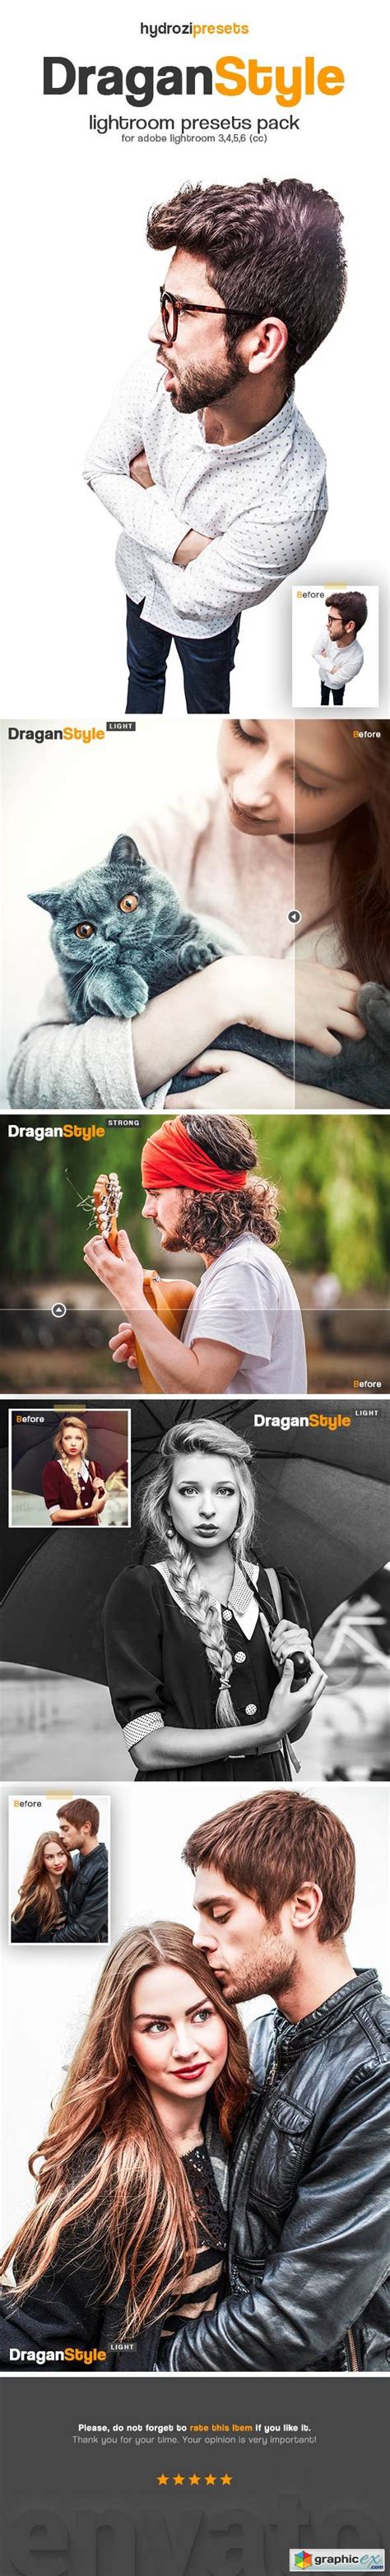 Dragan Style Lightroom Presets Free Download Vector Stock Image